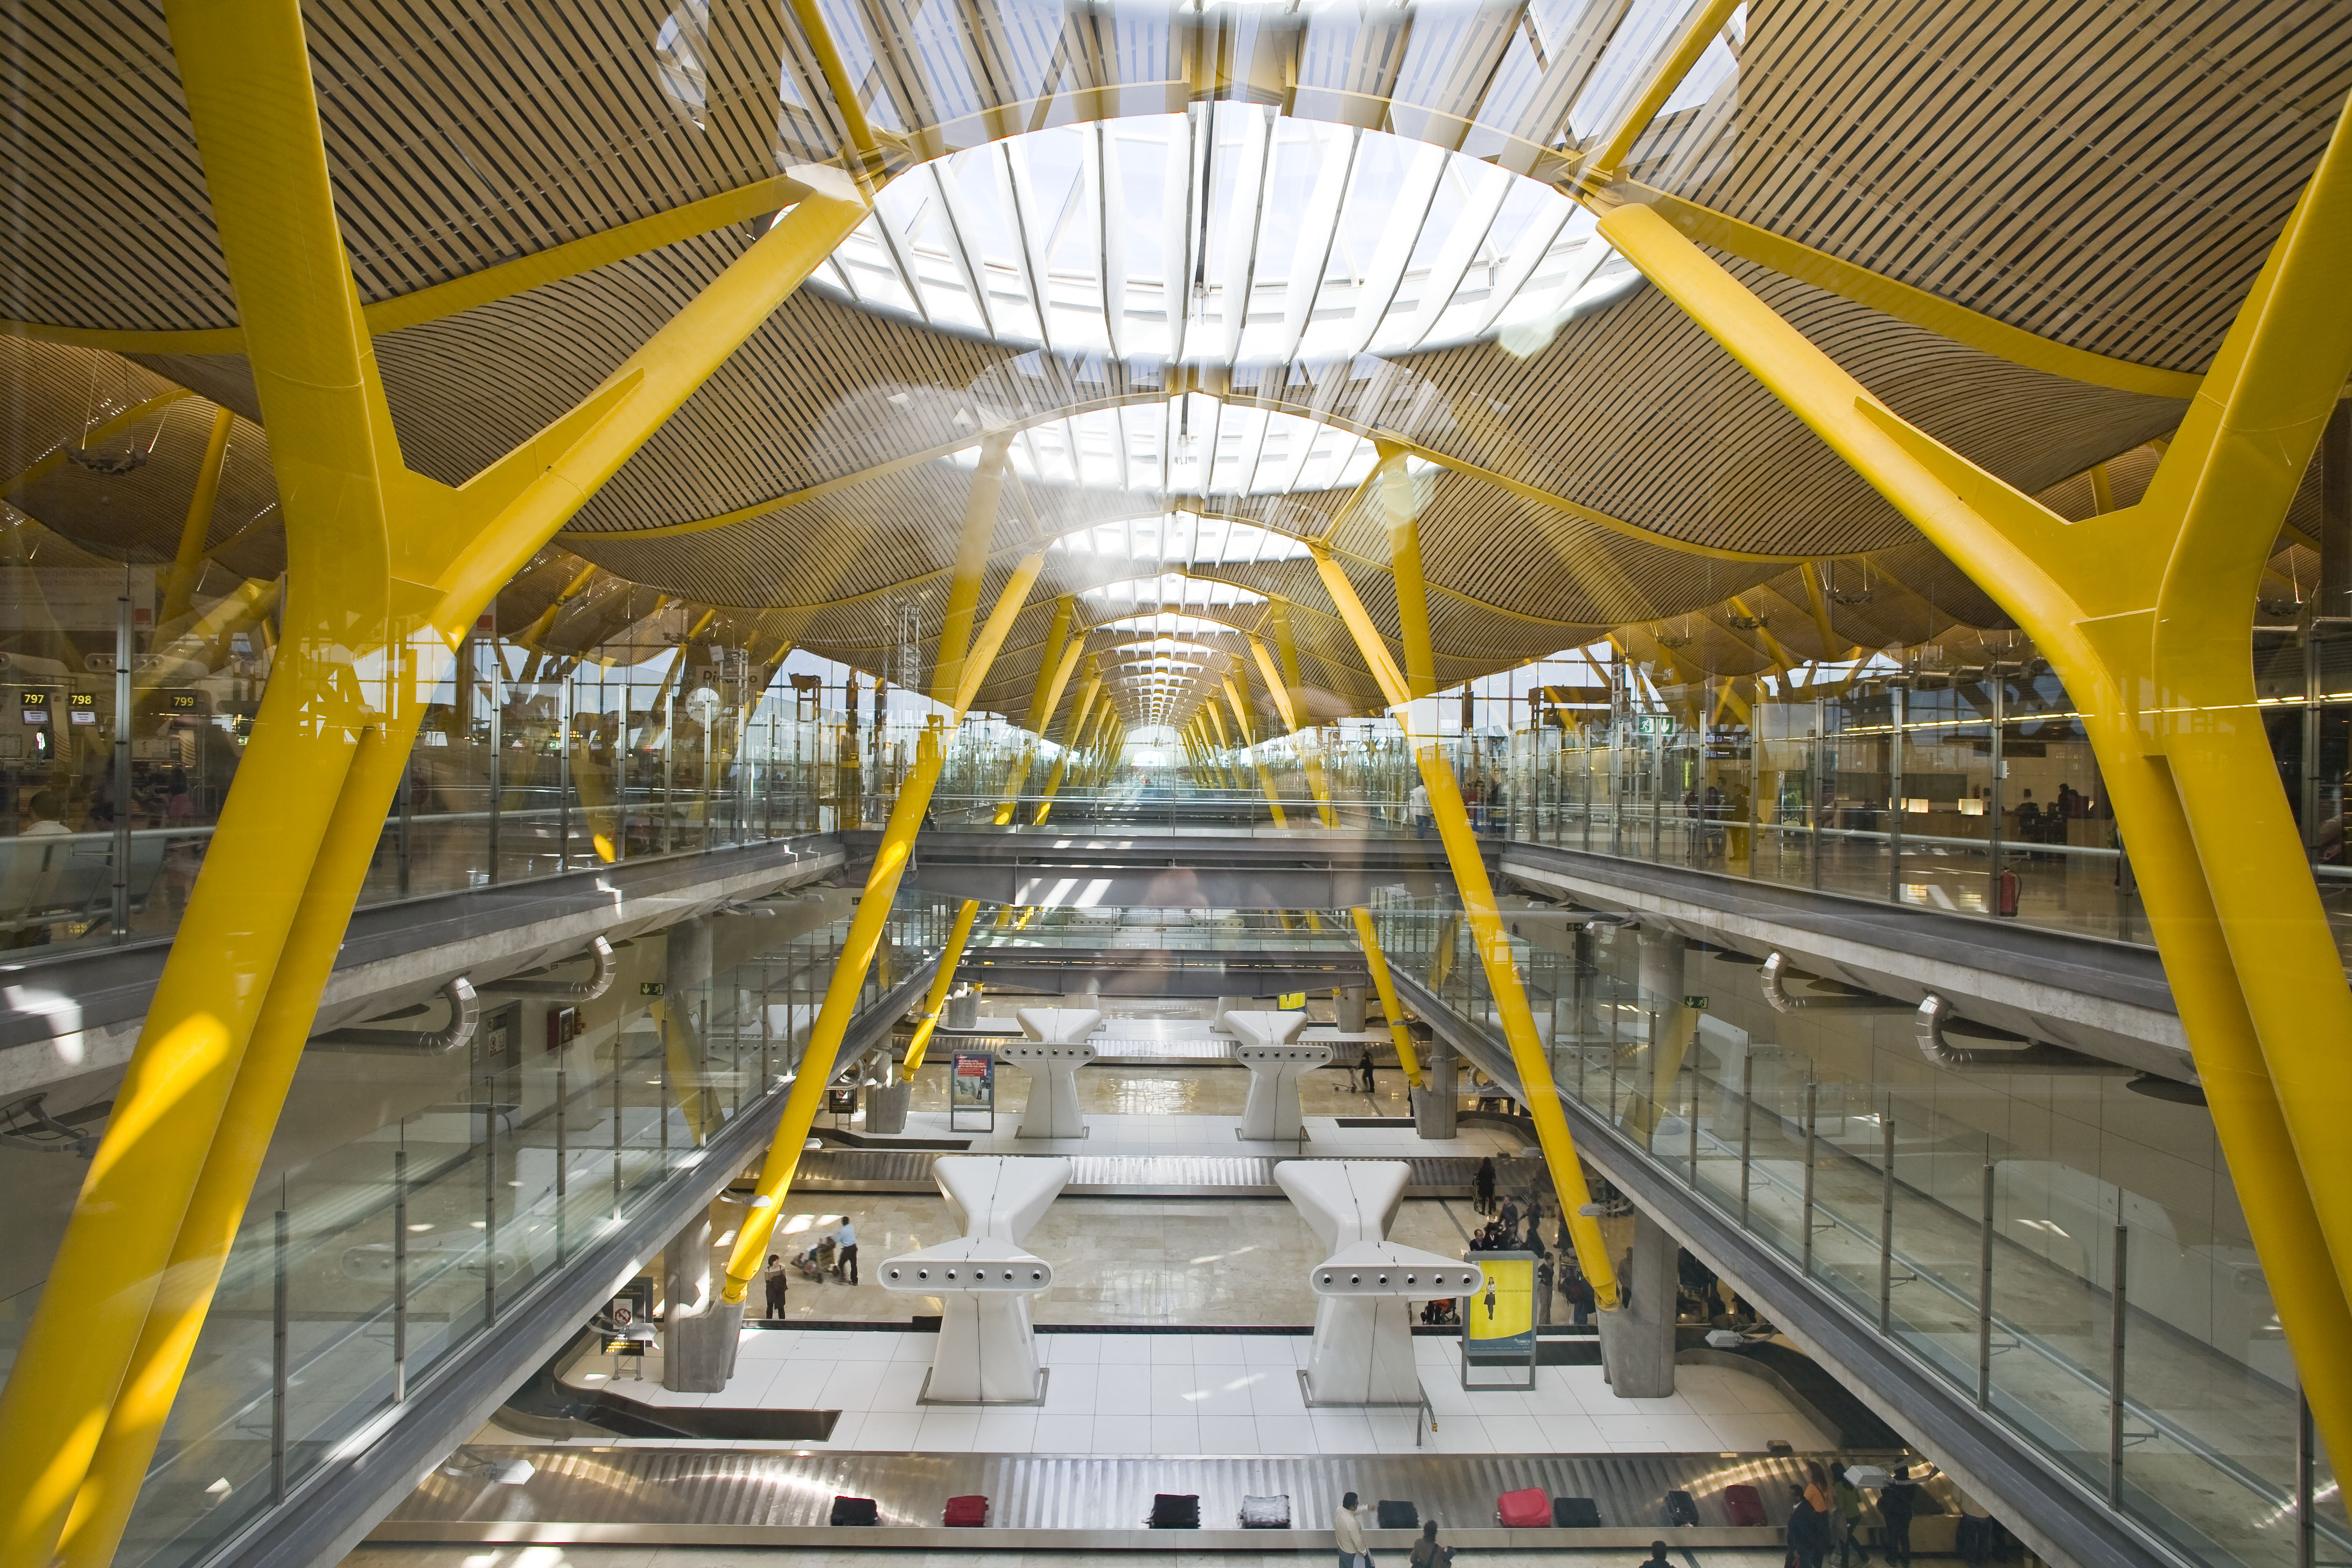 Aeropuerto Adolfo Suárez-Madrid Barajas. Terminal T4